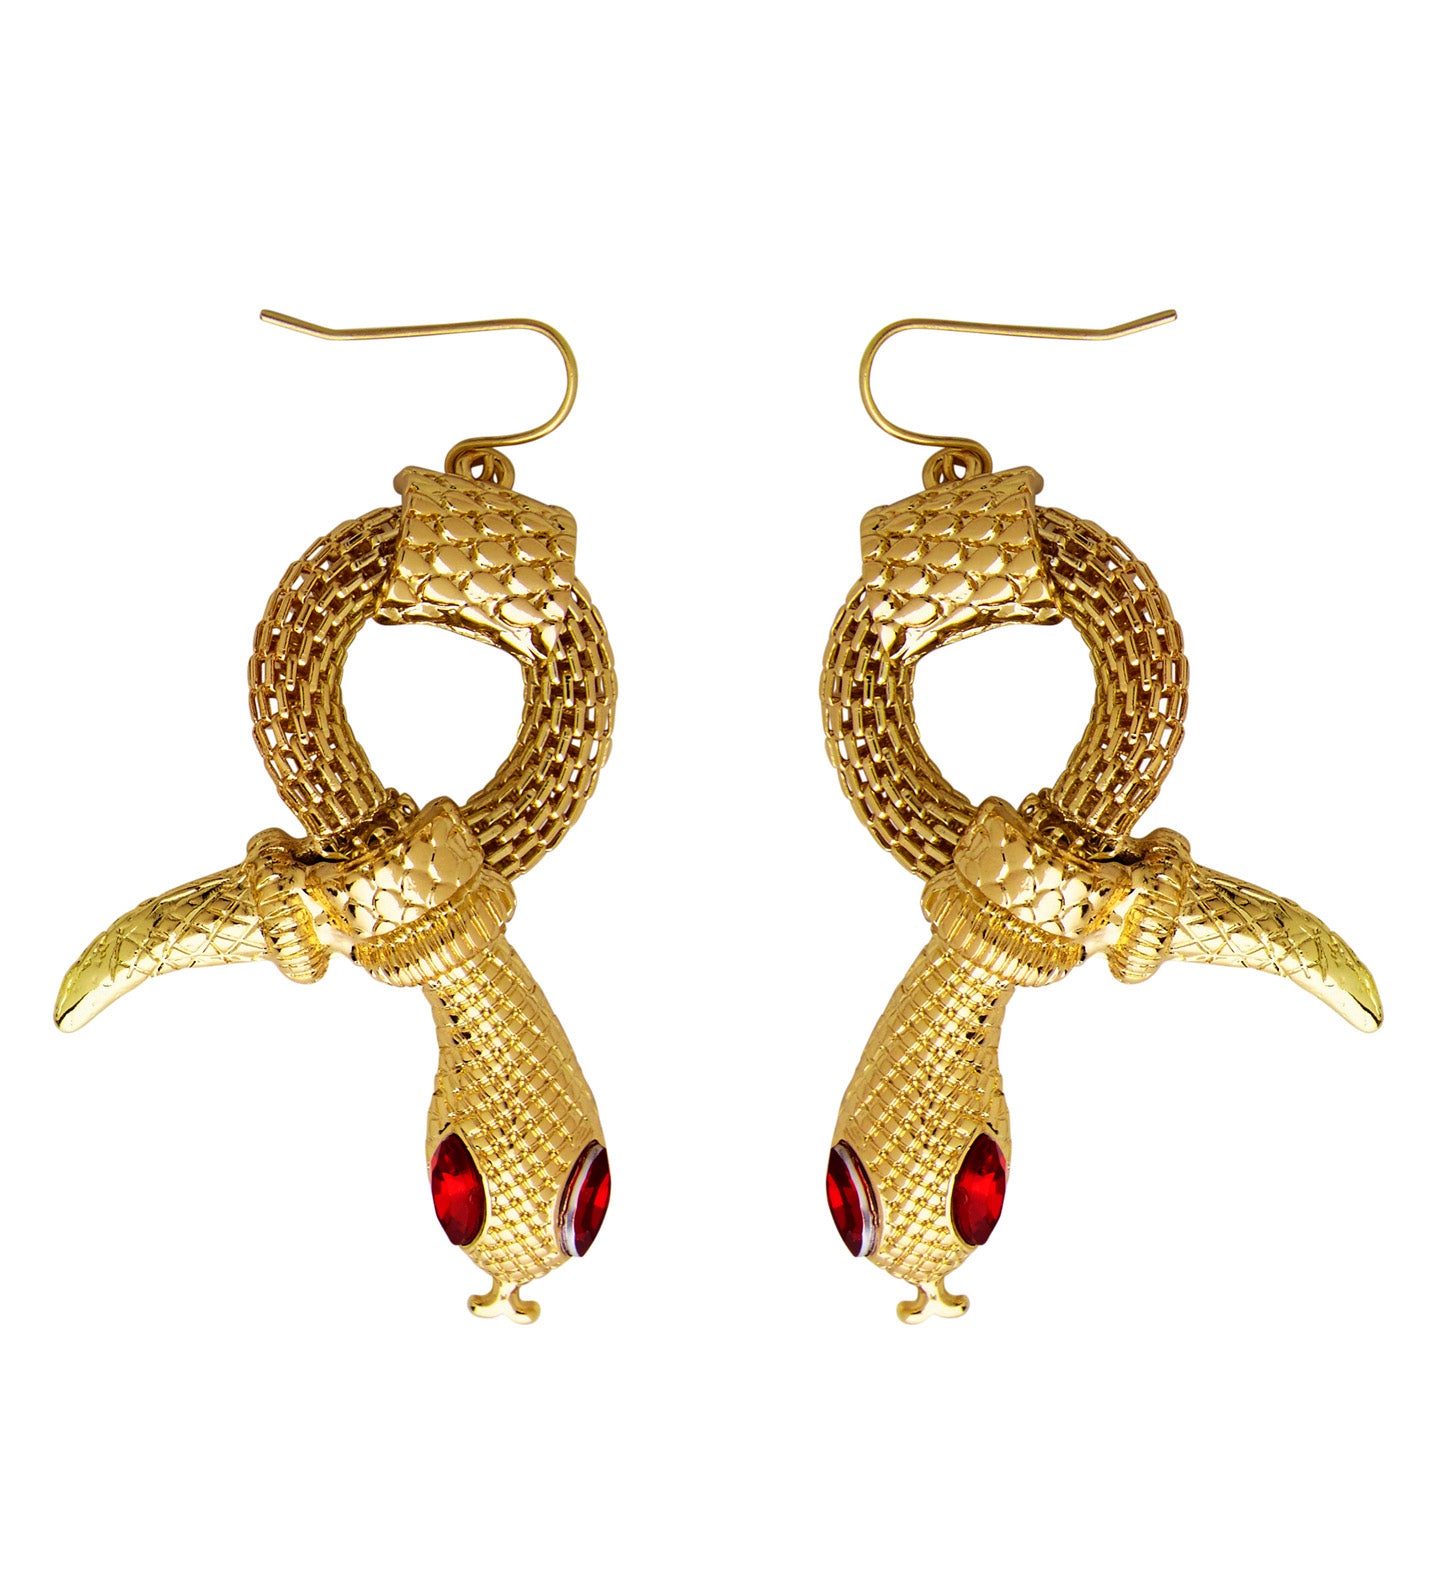 Gold Snake Earrings with Red Gem Eyes